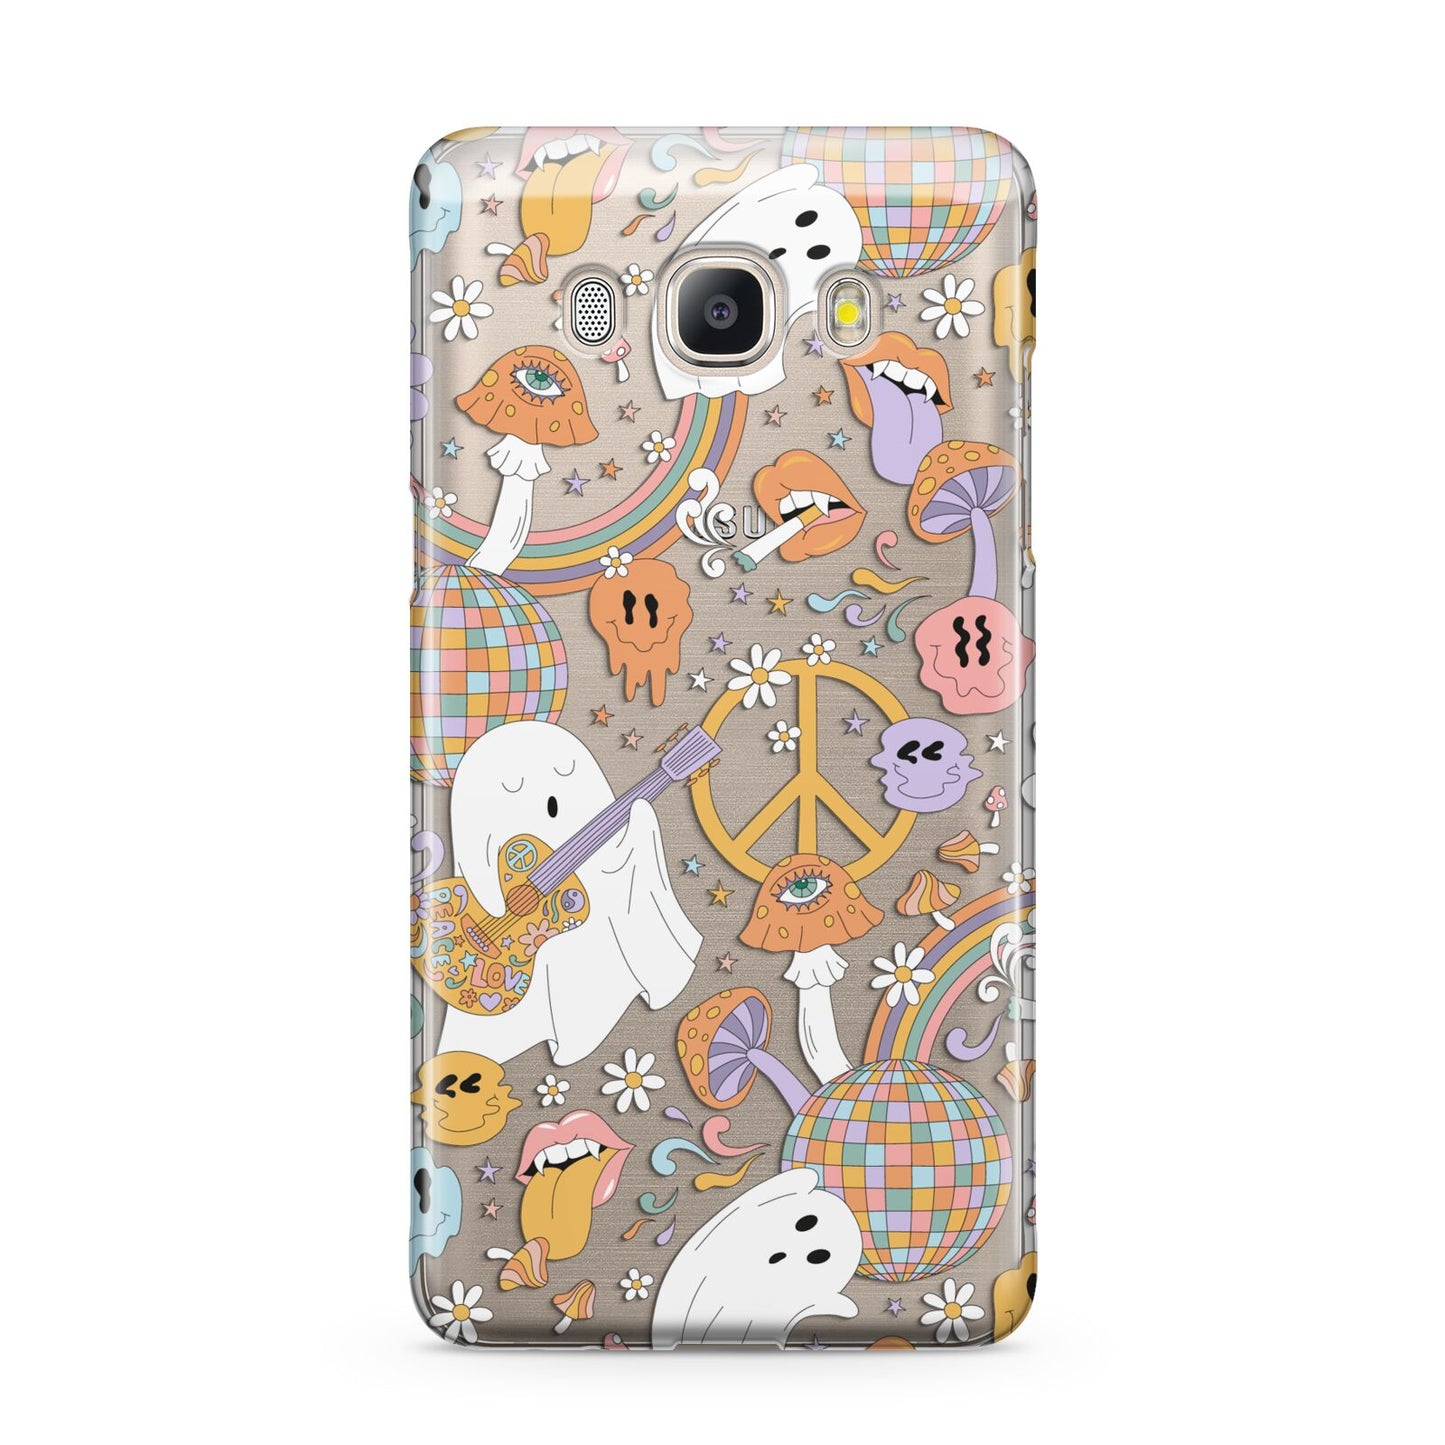 Disco Ghosts Samsung Galaxy J5 2016 Case